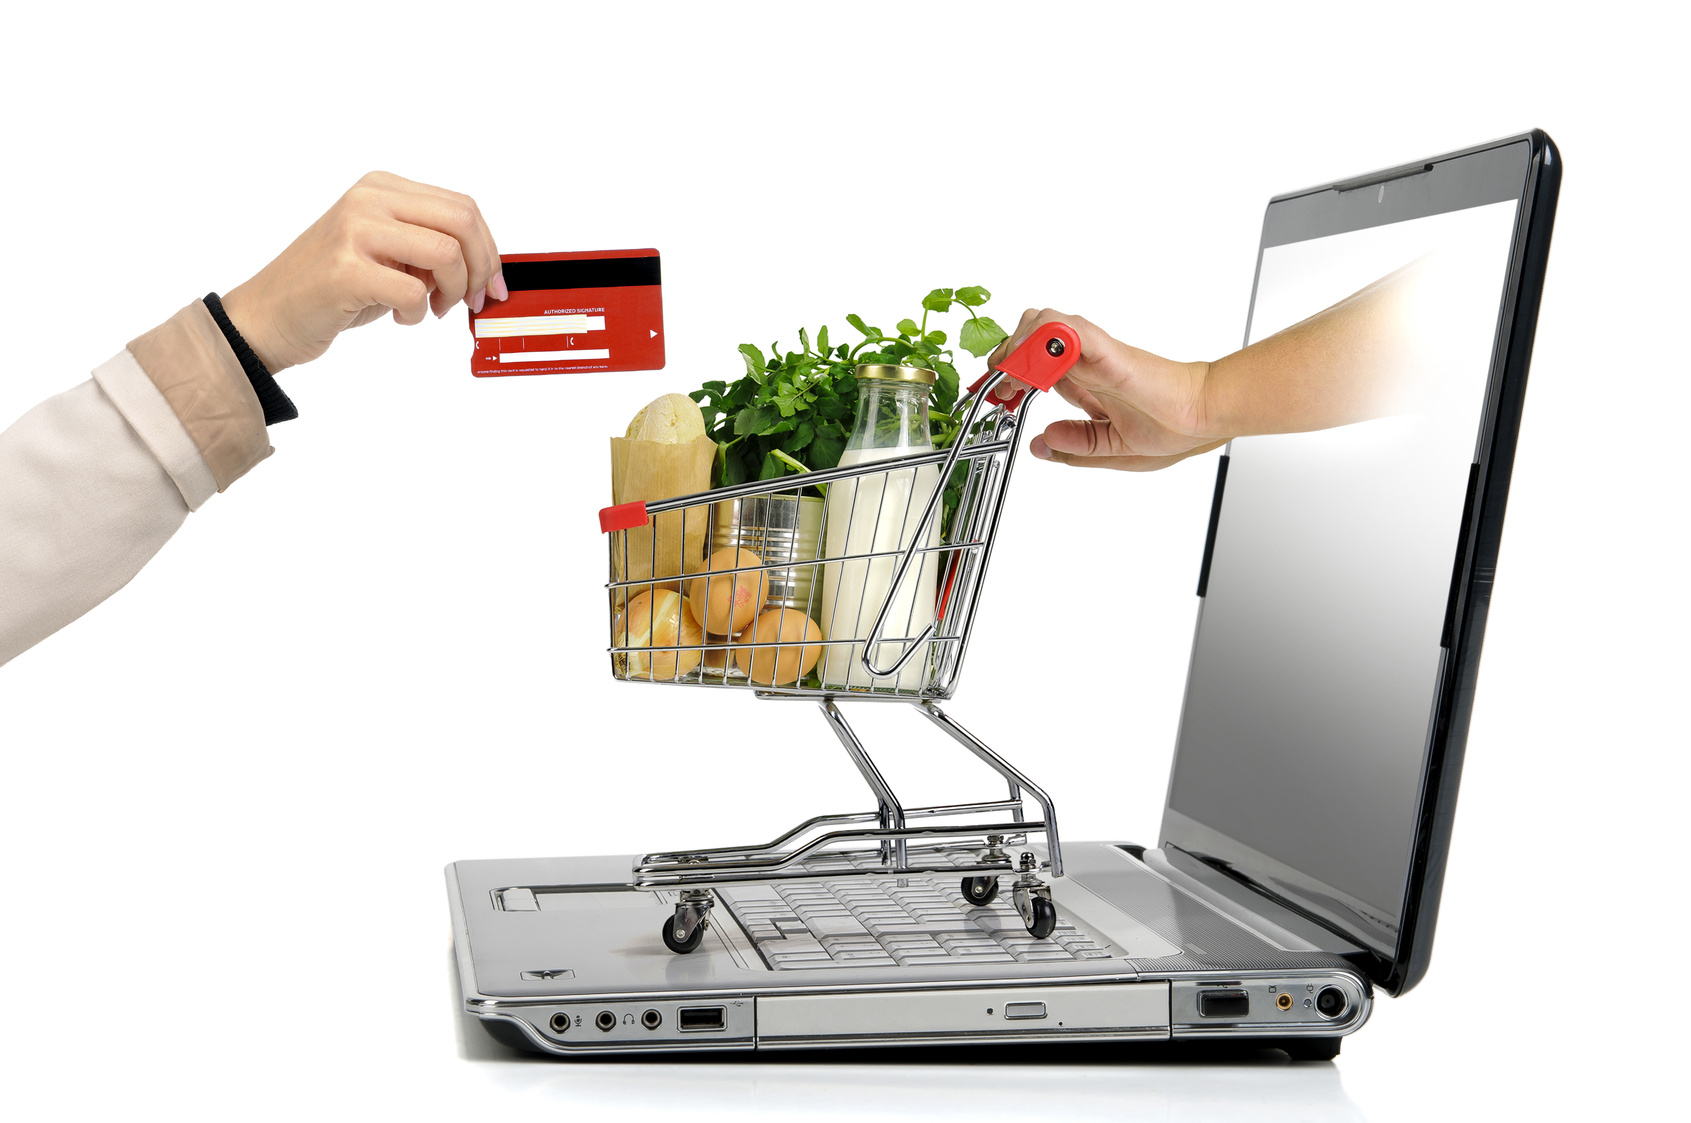 ROI & NI shoppers spending £1,033 online